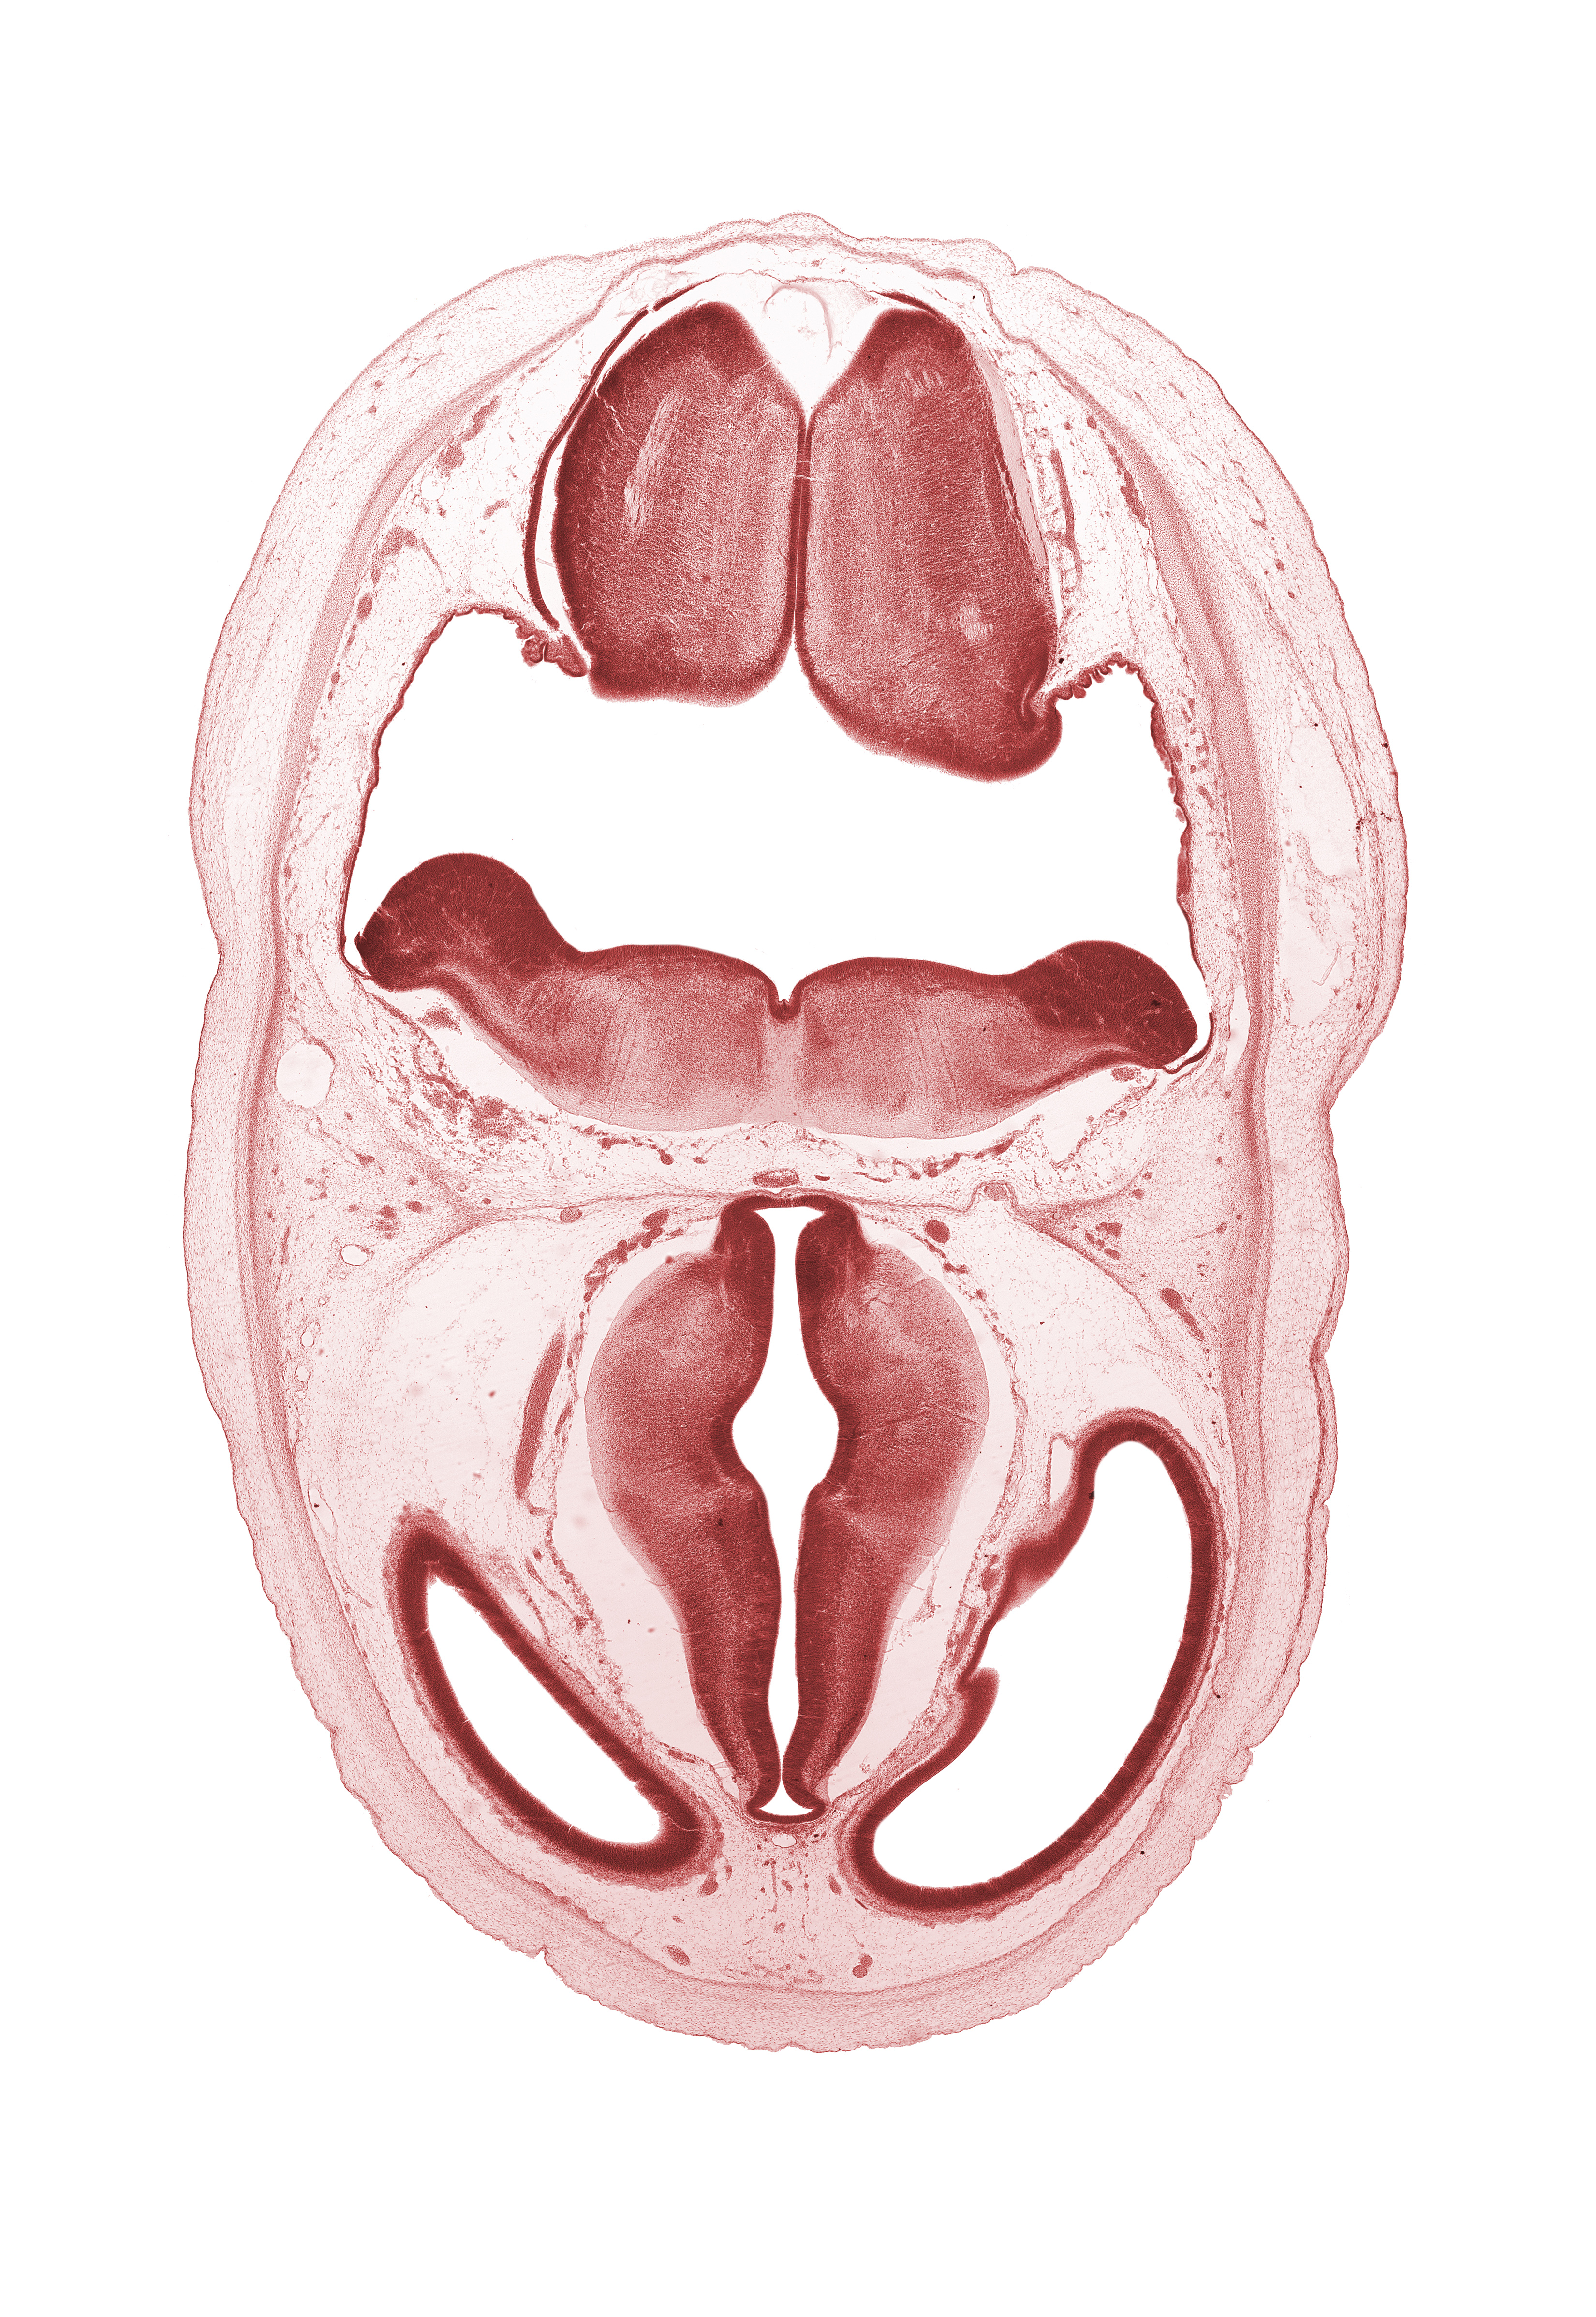 artifact separation(s), cerebral vesicle (telencephalon), dorsal thalamus, hypothalamic sulcus, lateral ventricle, loose connective tissue, myelencephalon (medulla oblongata), oculomotor nerve (CN III), osteogenic layer, posterior communicating artery, rhombencoel (fourth ventricle), subarachnoid space, sulcus dorsalis, surface ectoderm, ventral thalamus